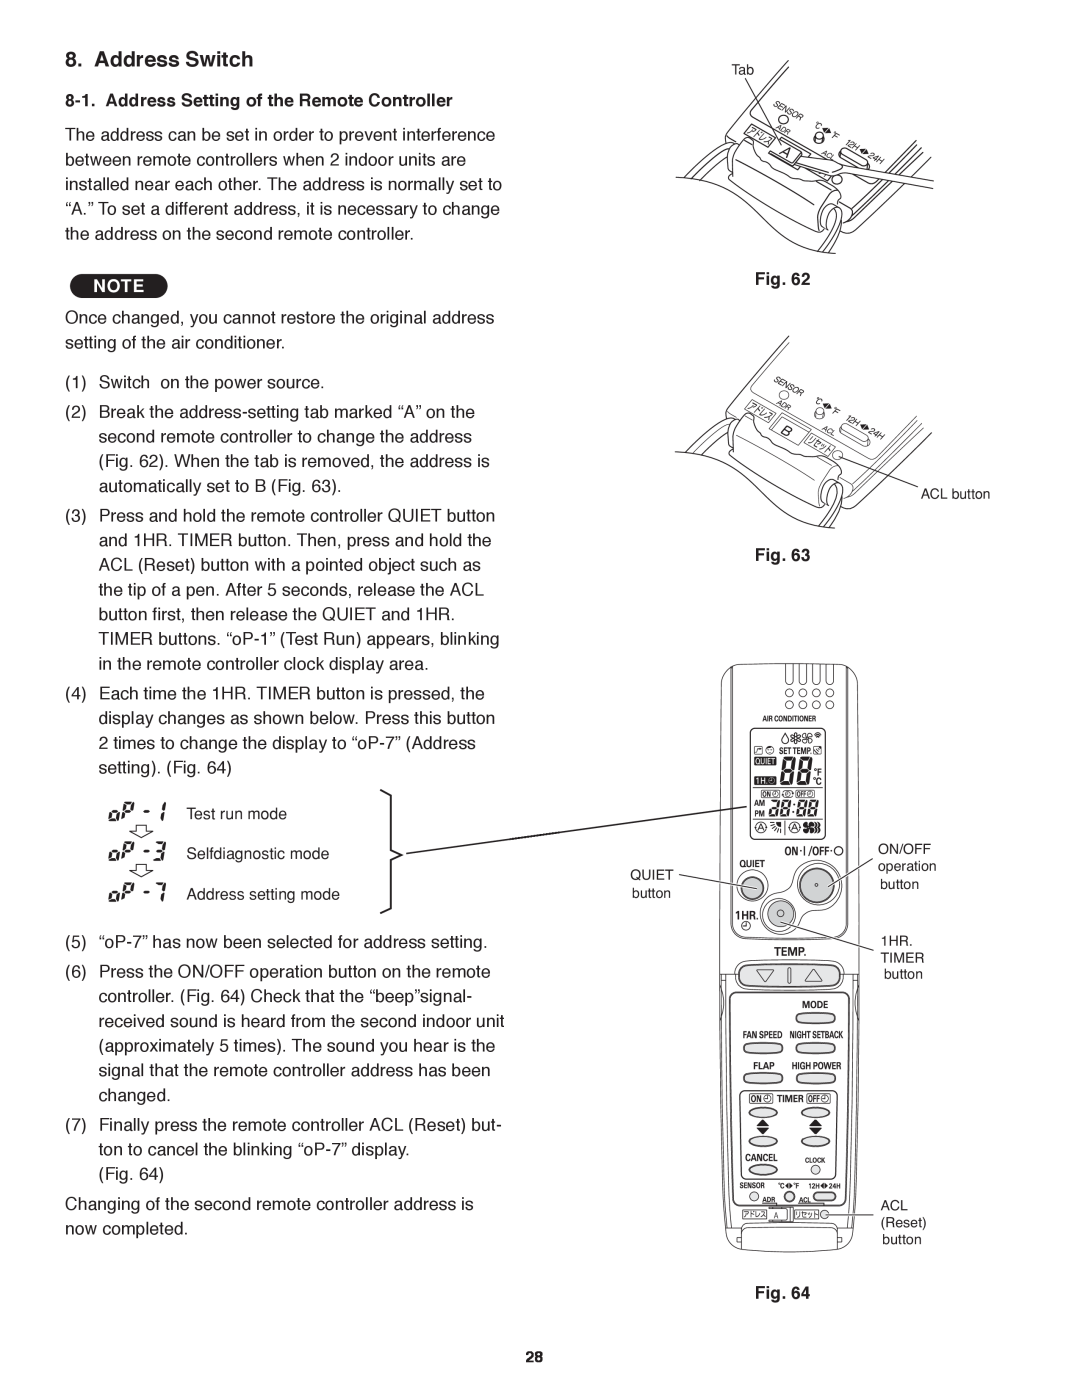 Panasonic CU-KS18NKU, CS-KS18NKU service manual Address Switch, Address Setting of the Remote Controller, Fig 